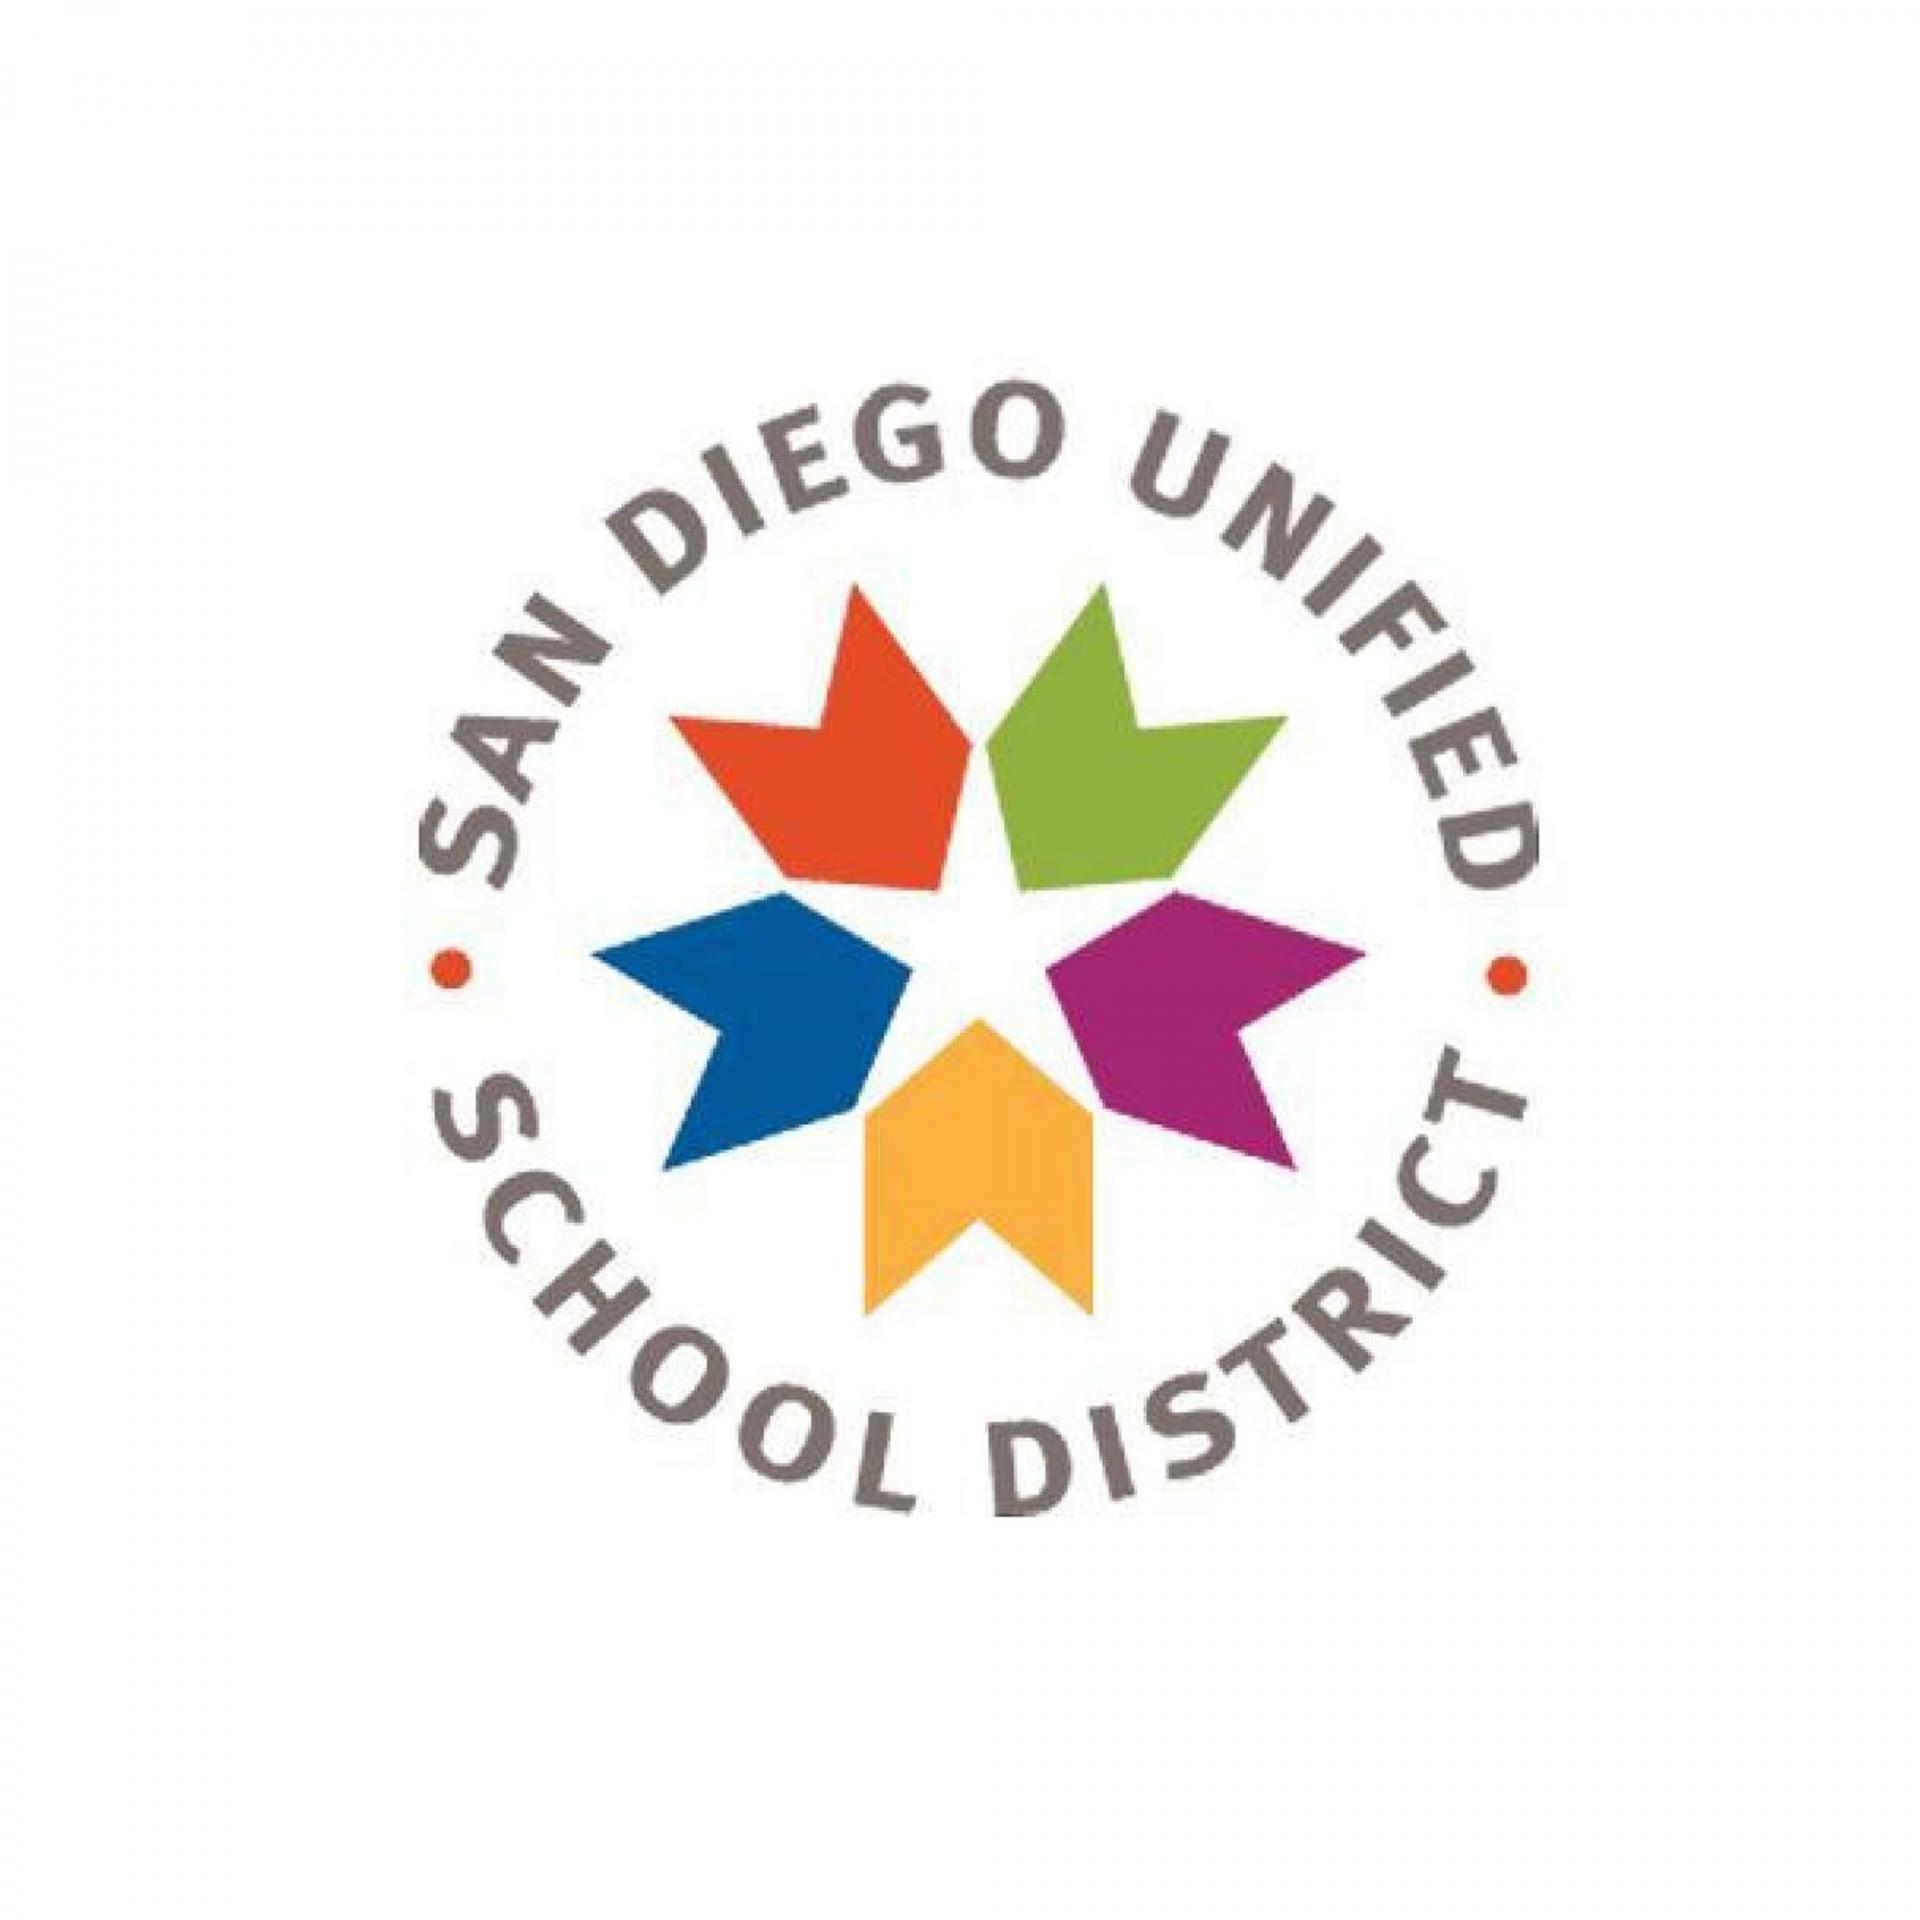 San Diego Unified School District logo